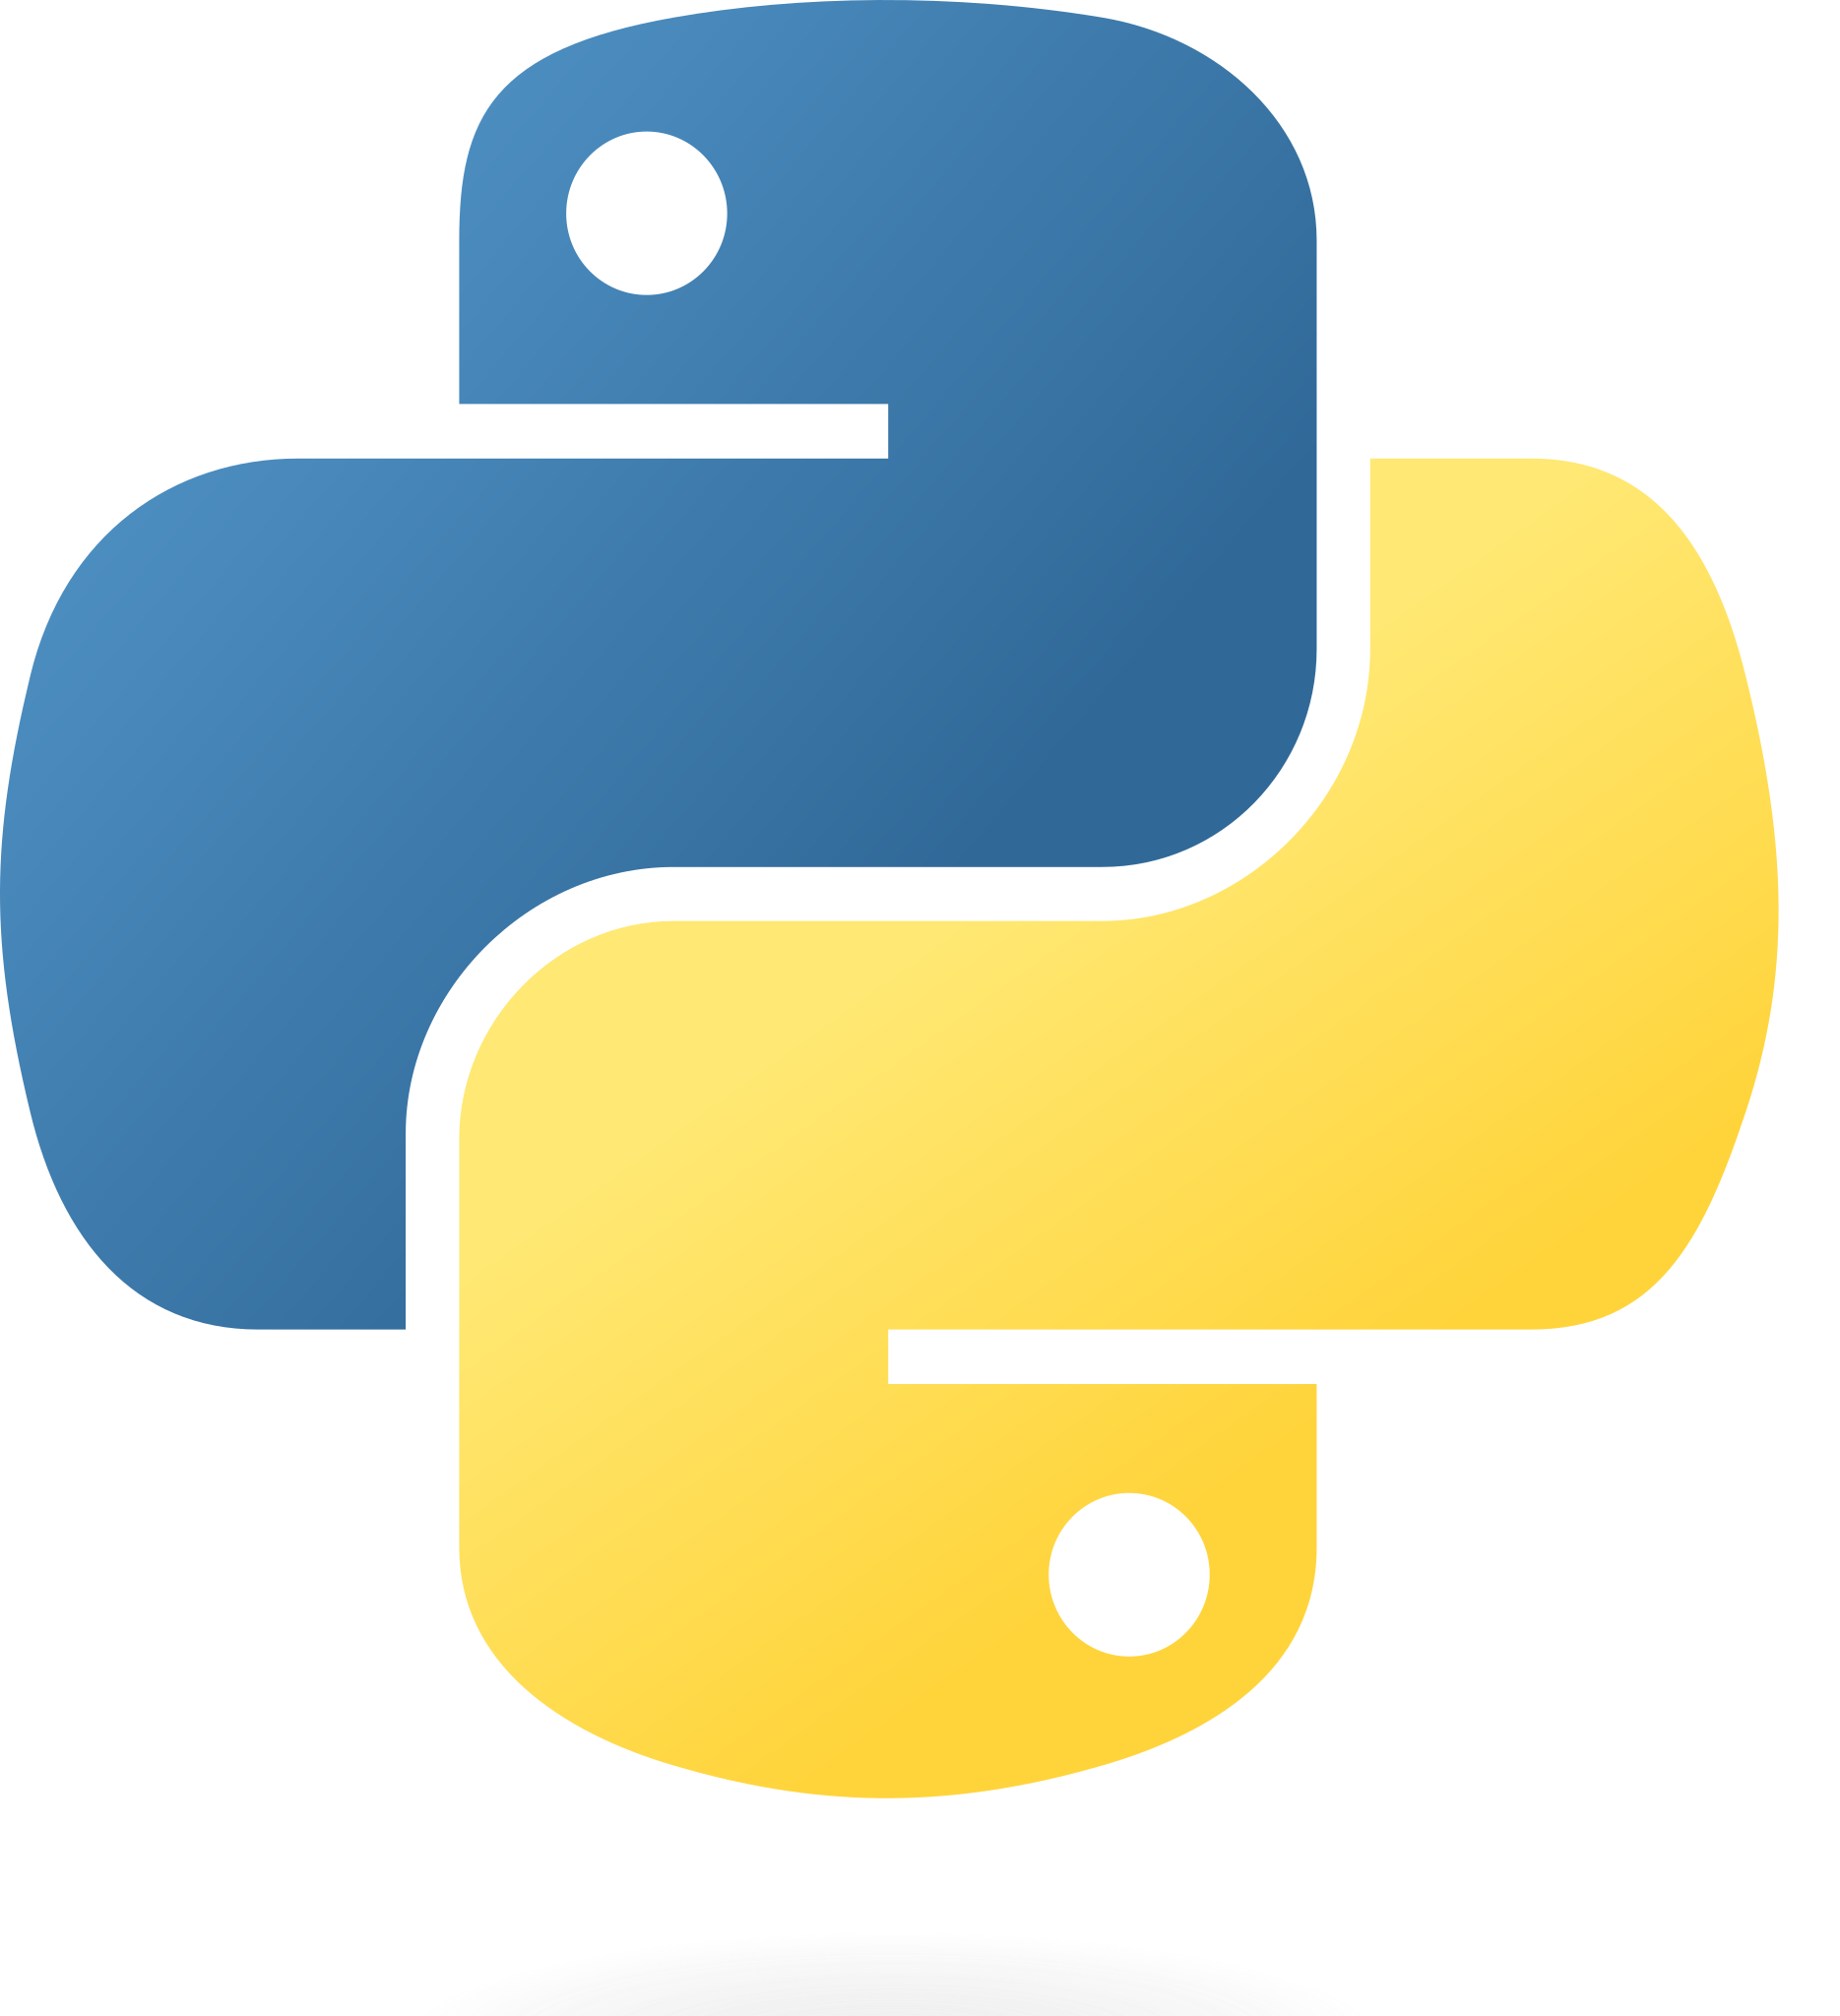 Python careers